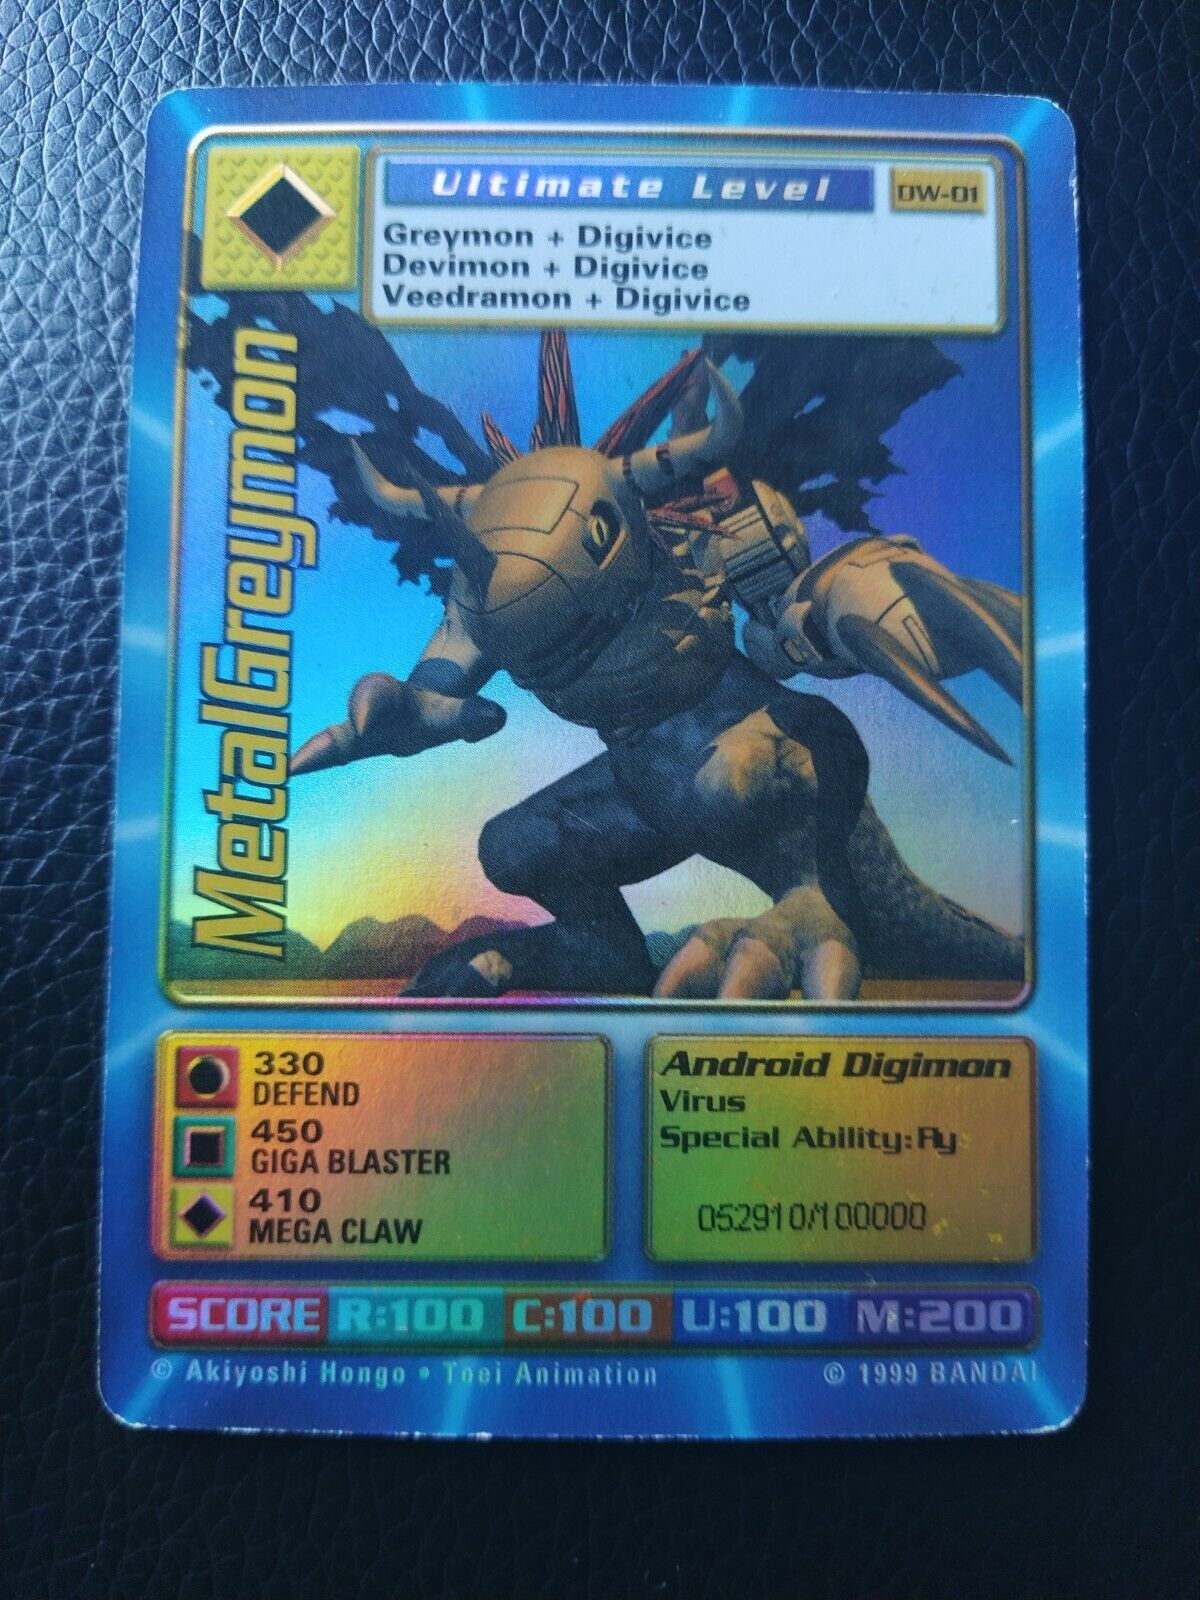 Digimon World PlayStation Promo DW-01 MetalGreymon - number 052910 / 100,000